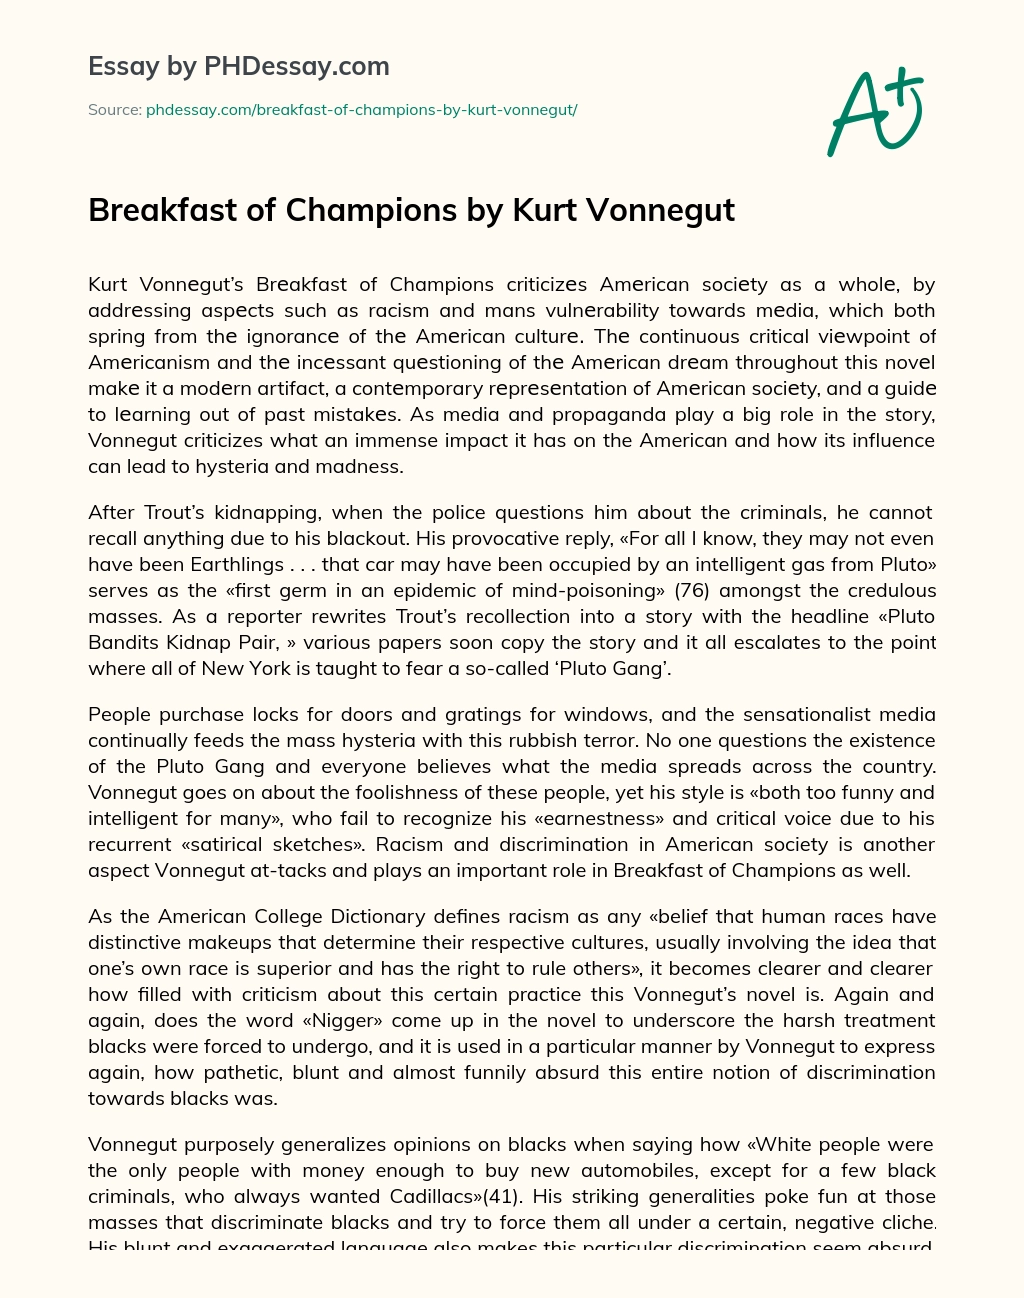 Breakfast of Champions by Kurt Vonnegut essay